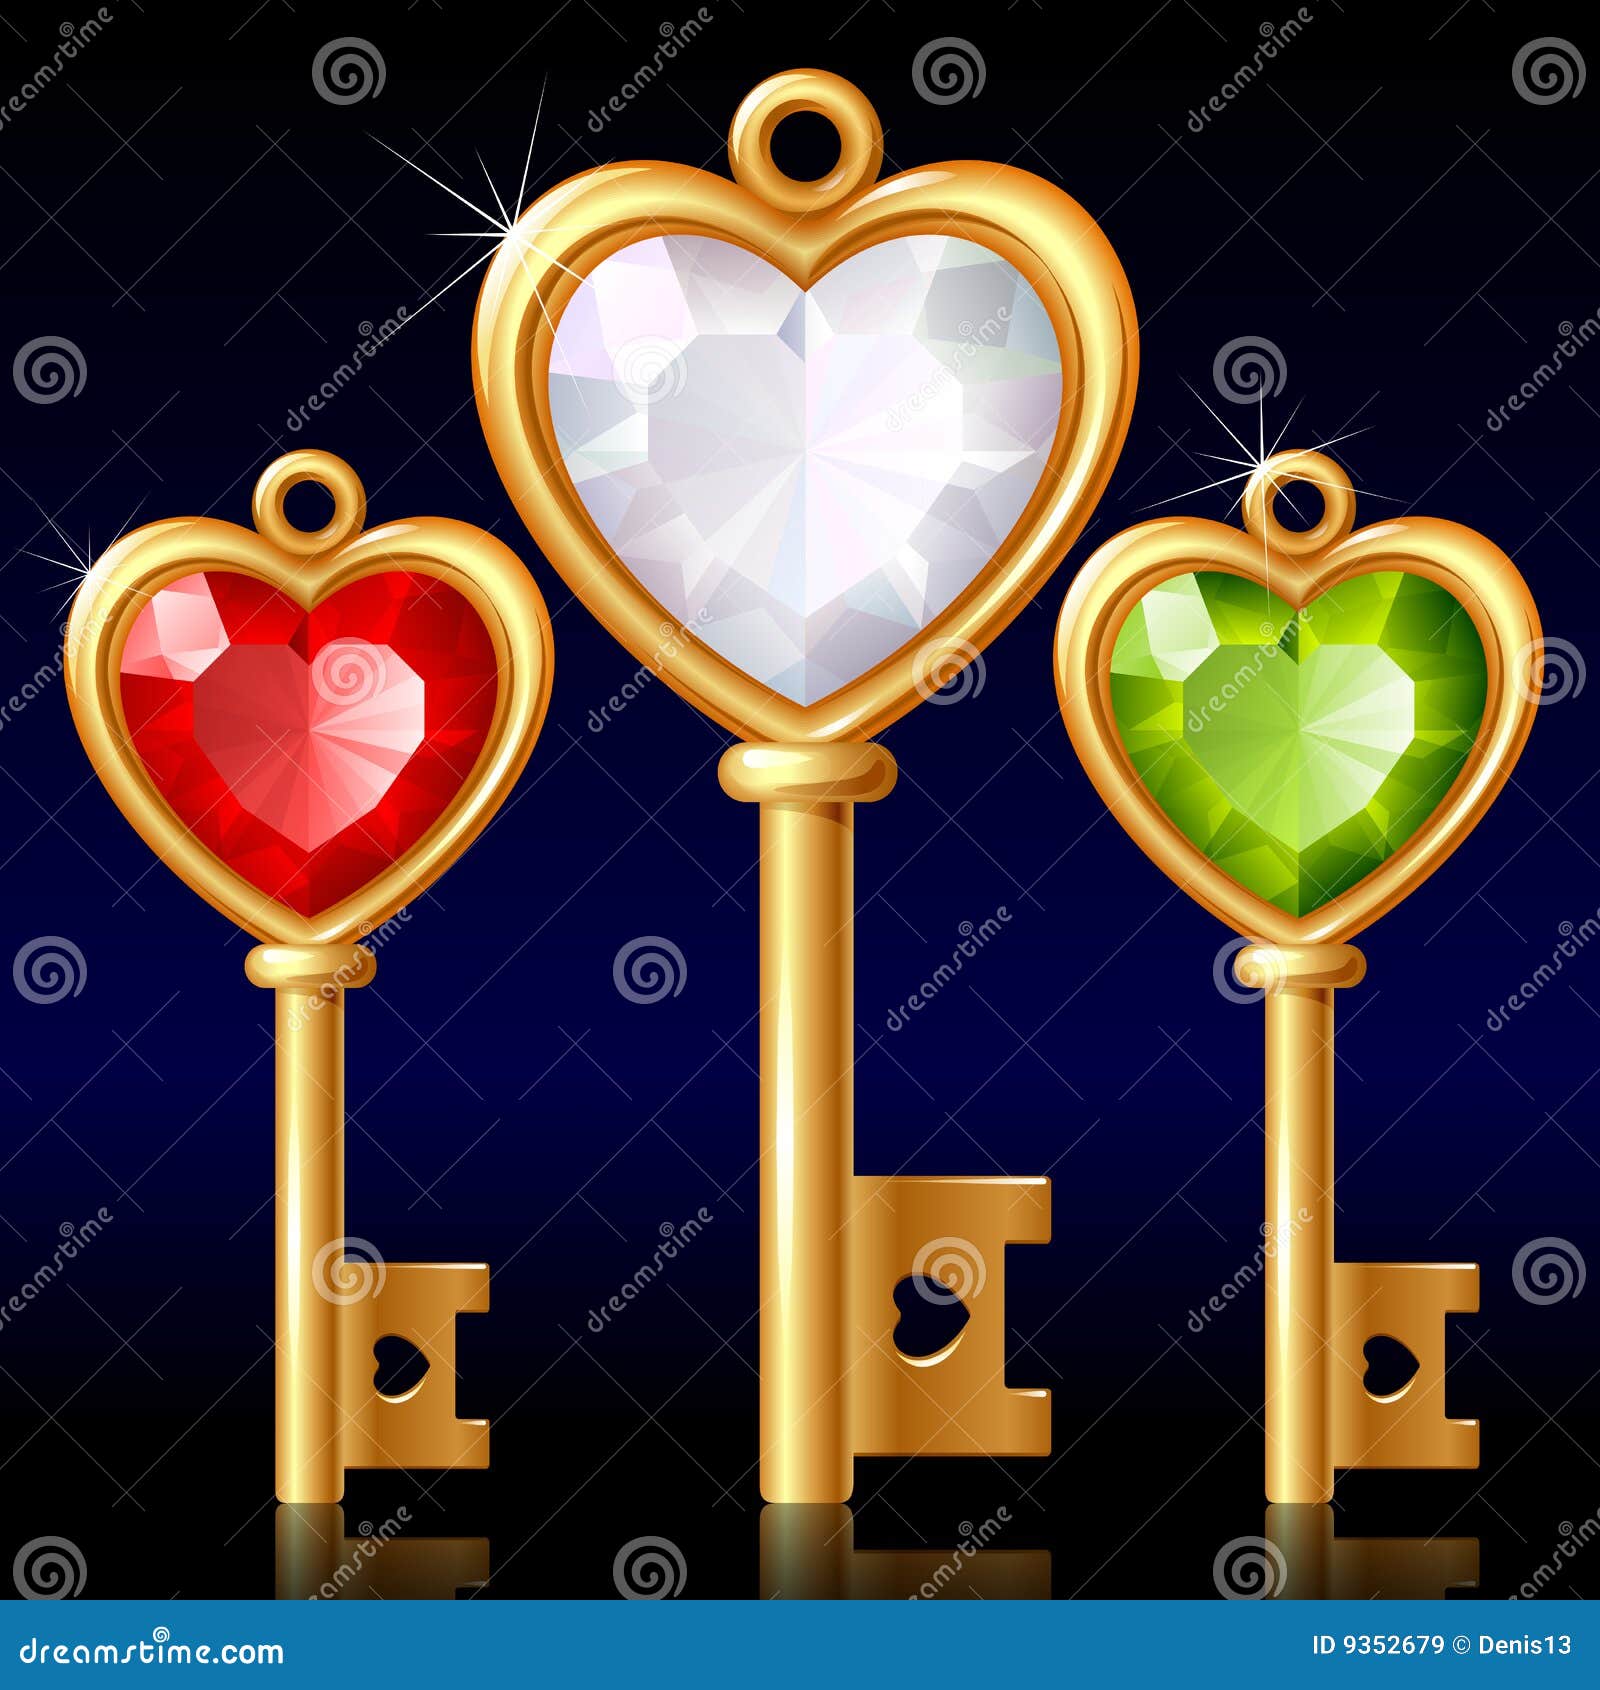 three golden keys with jewel heart